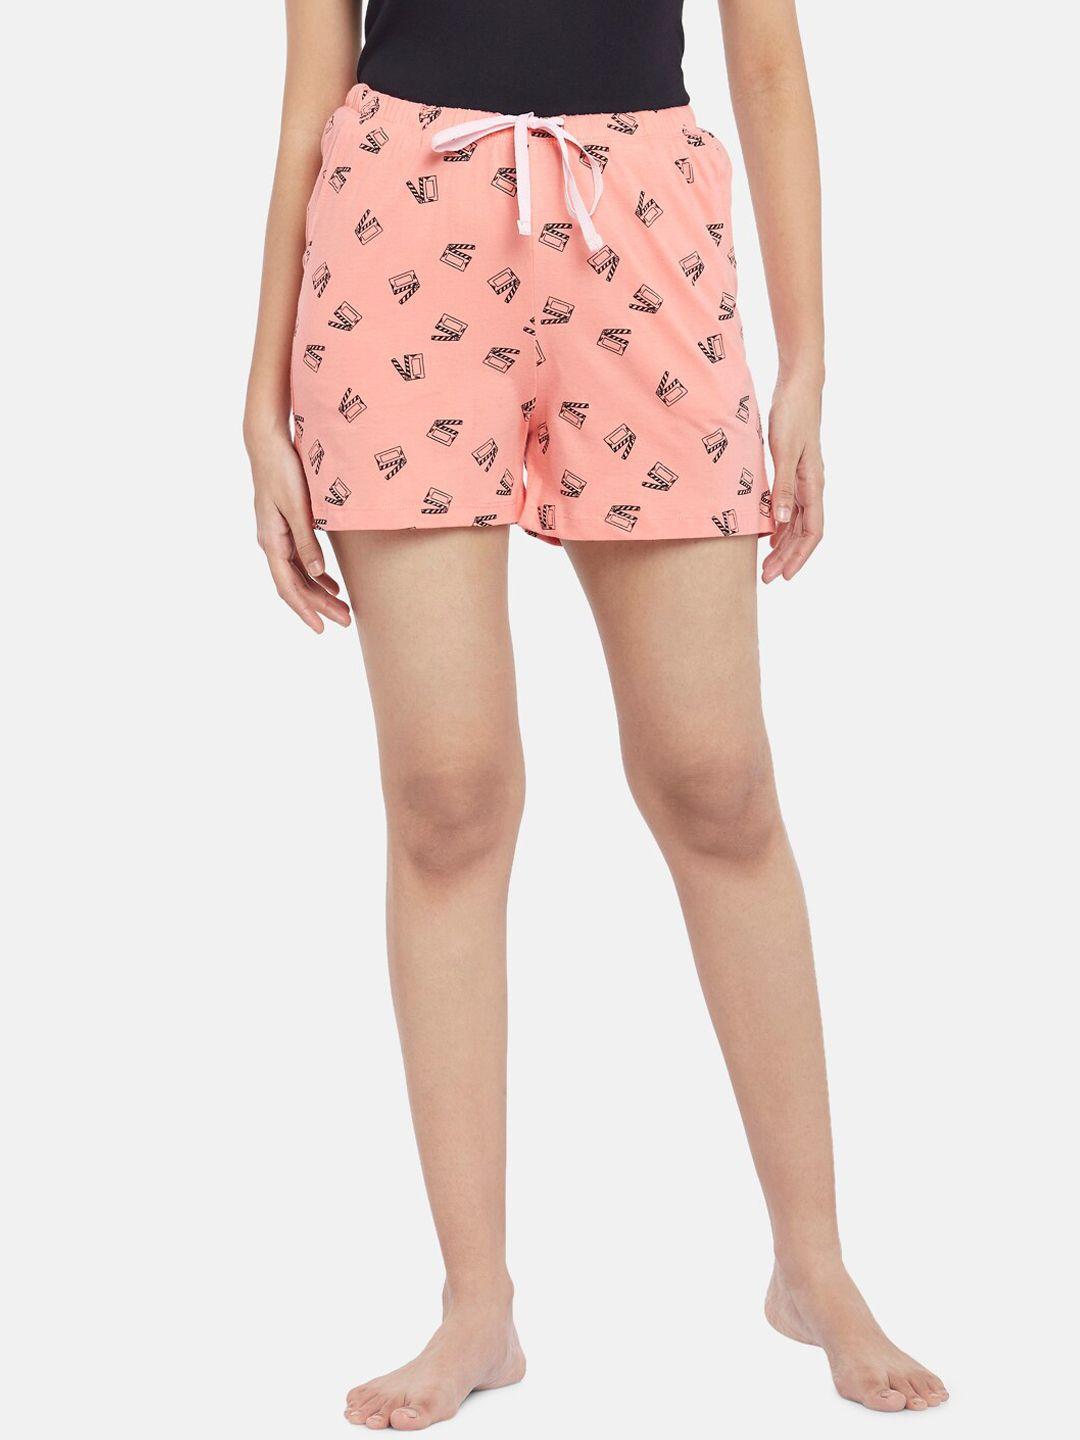 dreamz-by-pantaloons-women-coral-conversational-printed-pure-cotton-lounge-shorts